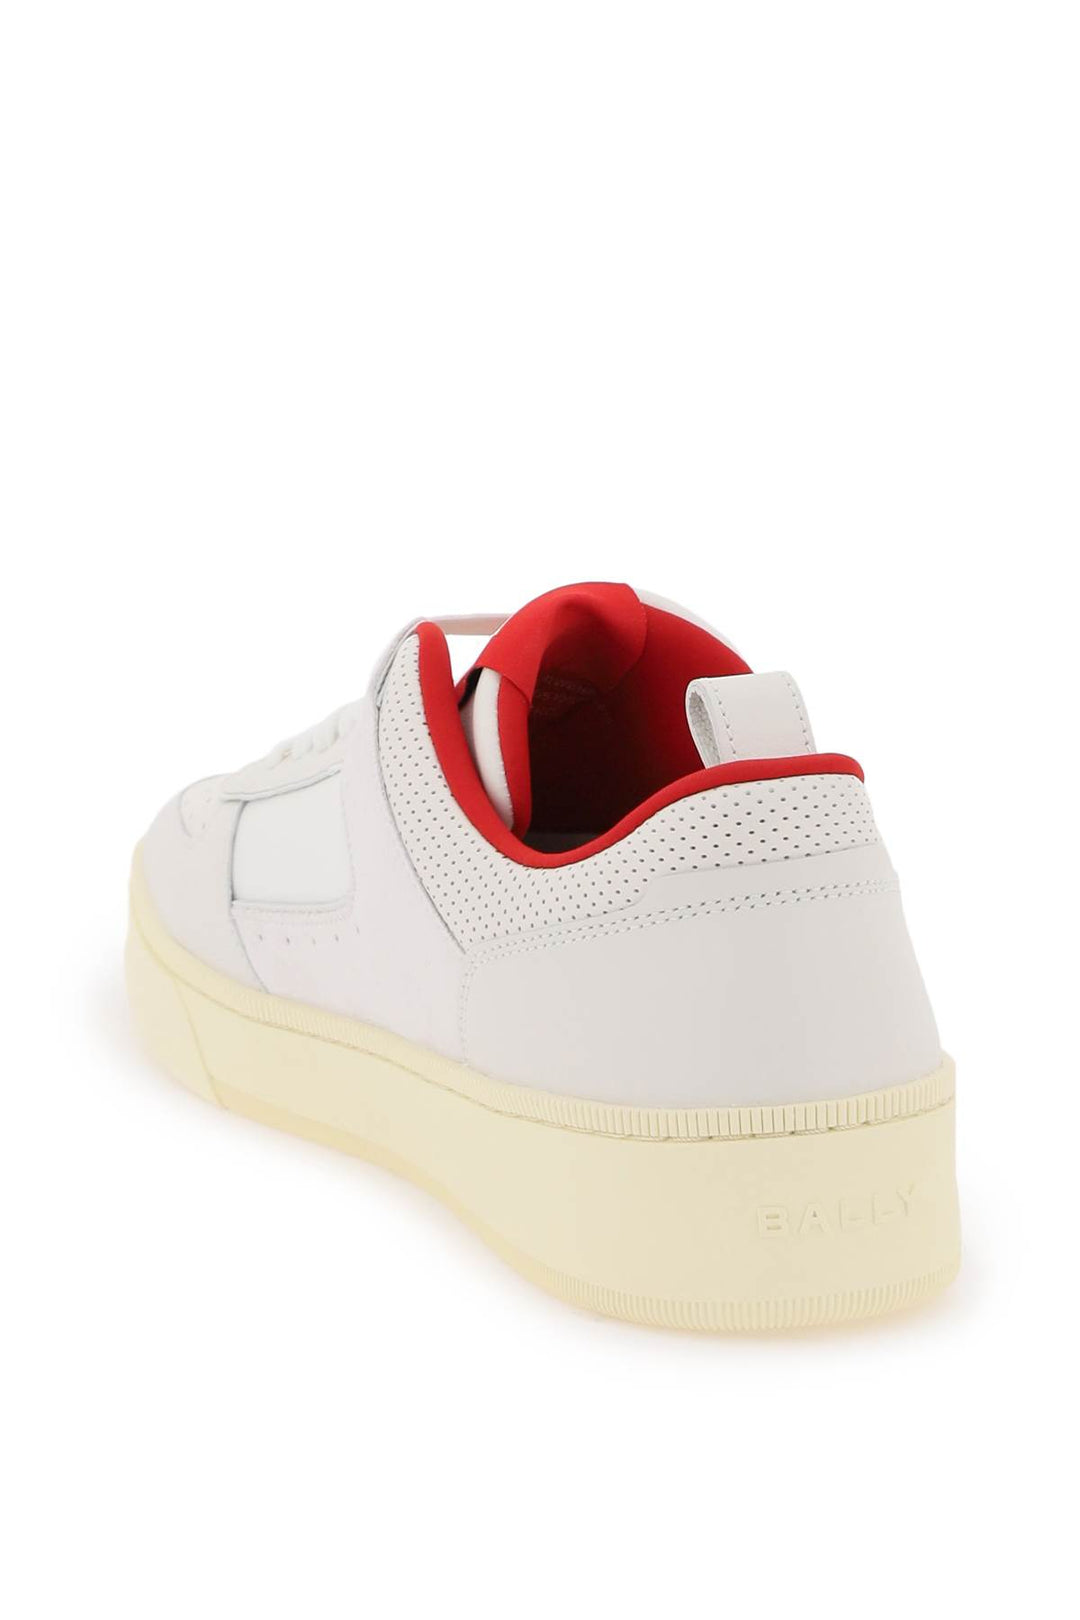 Bally Leather Riweira Sneakers   White